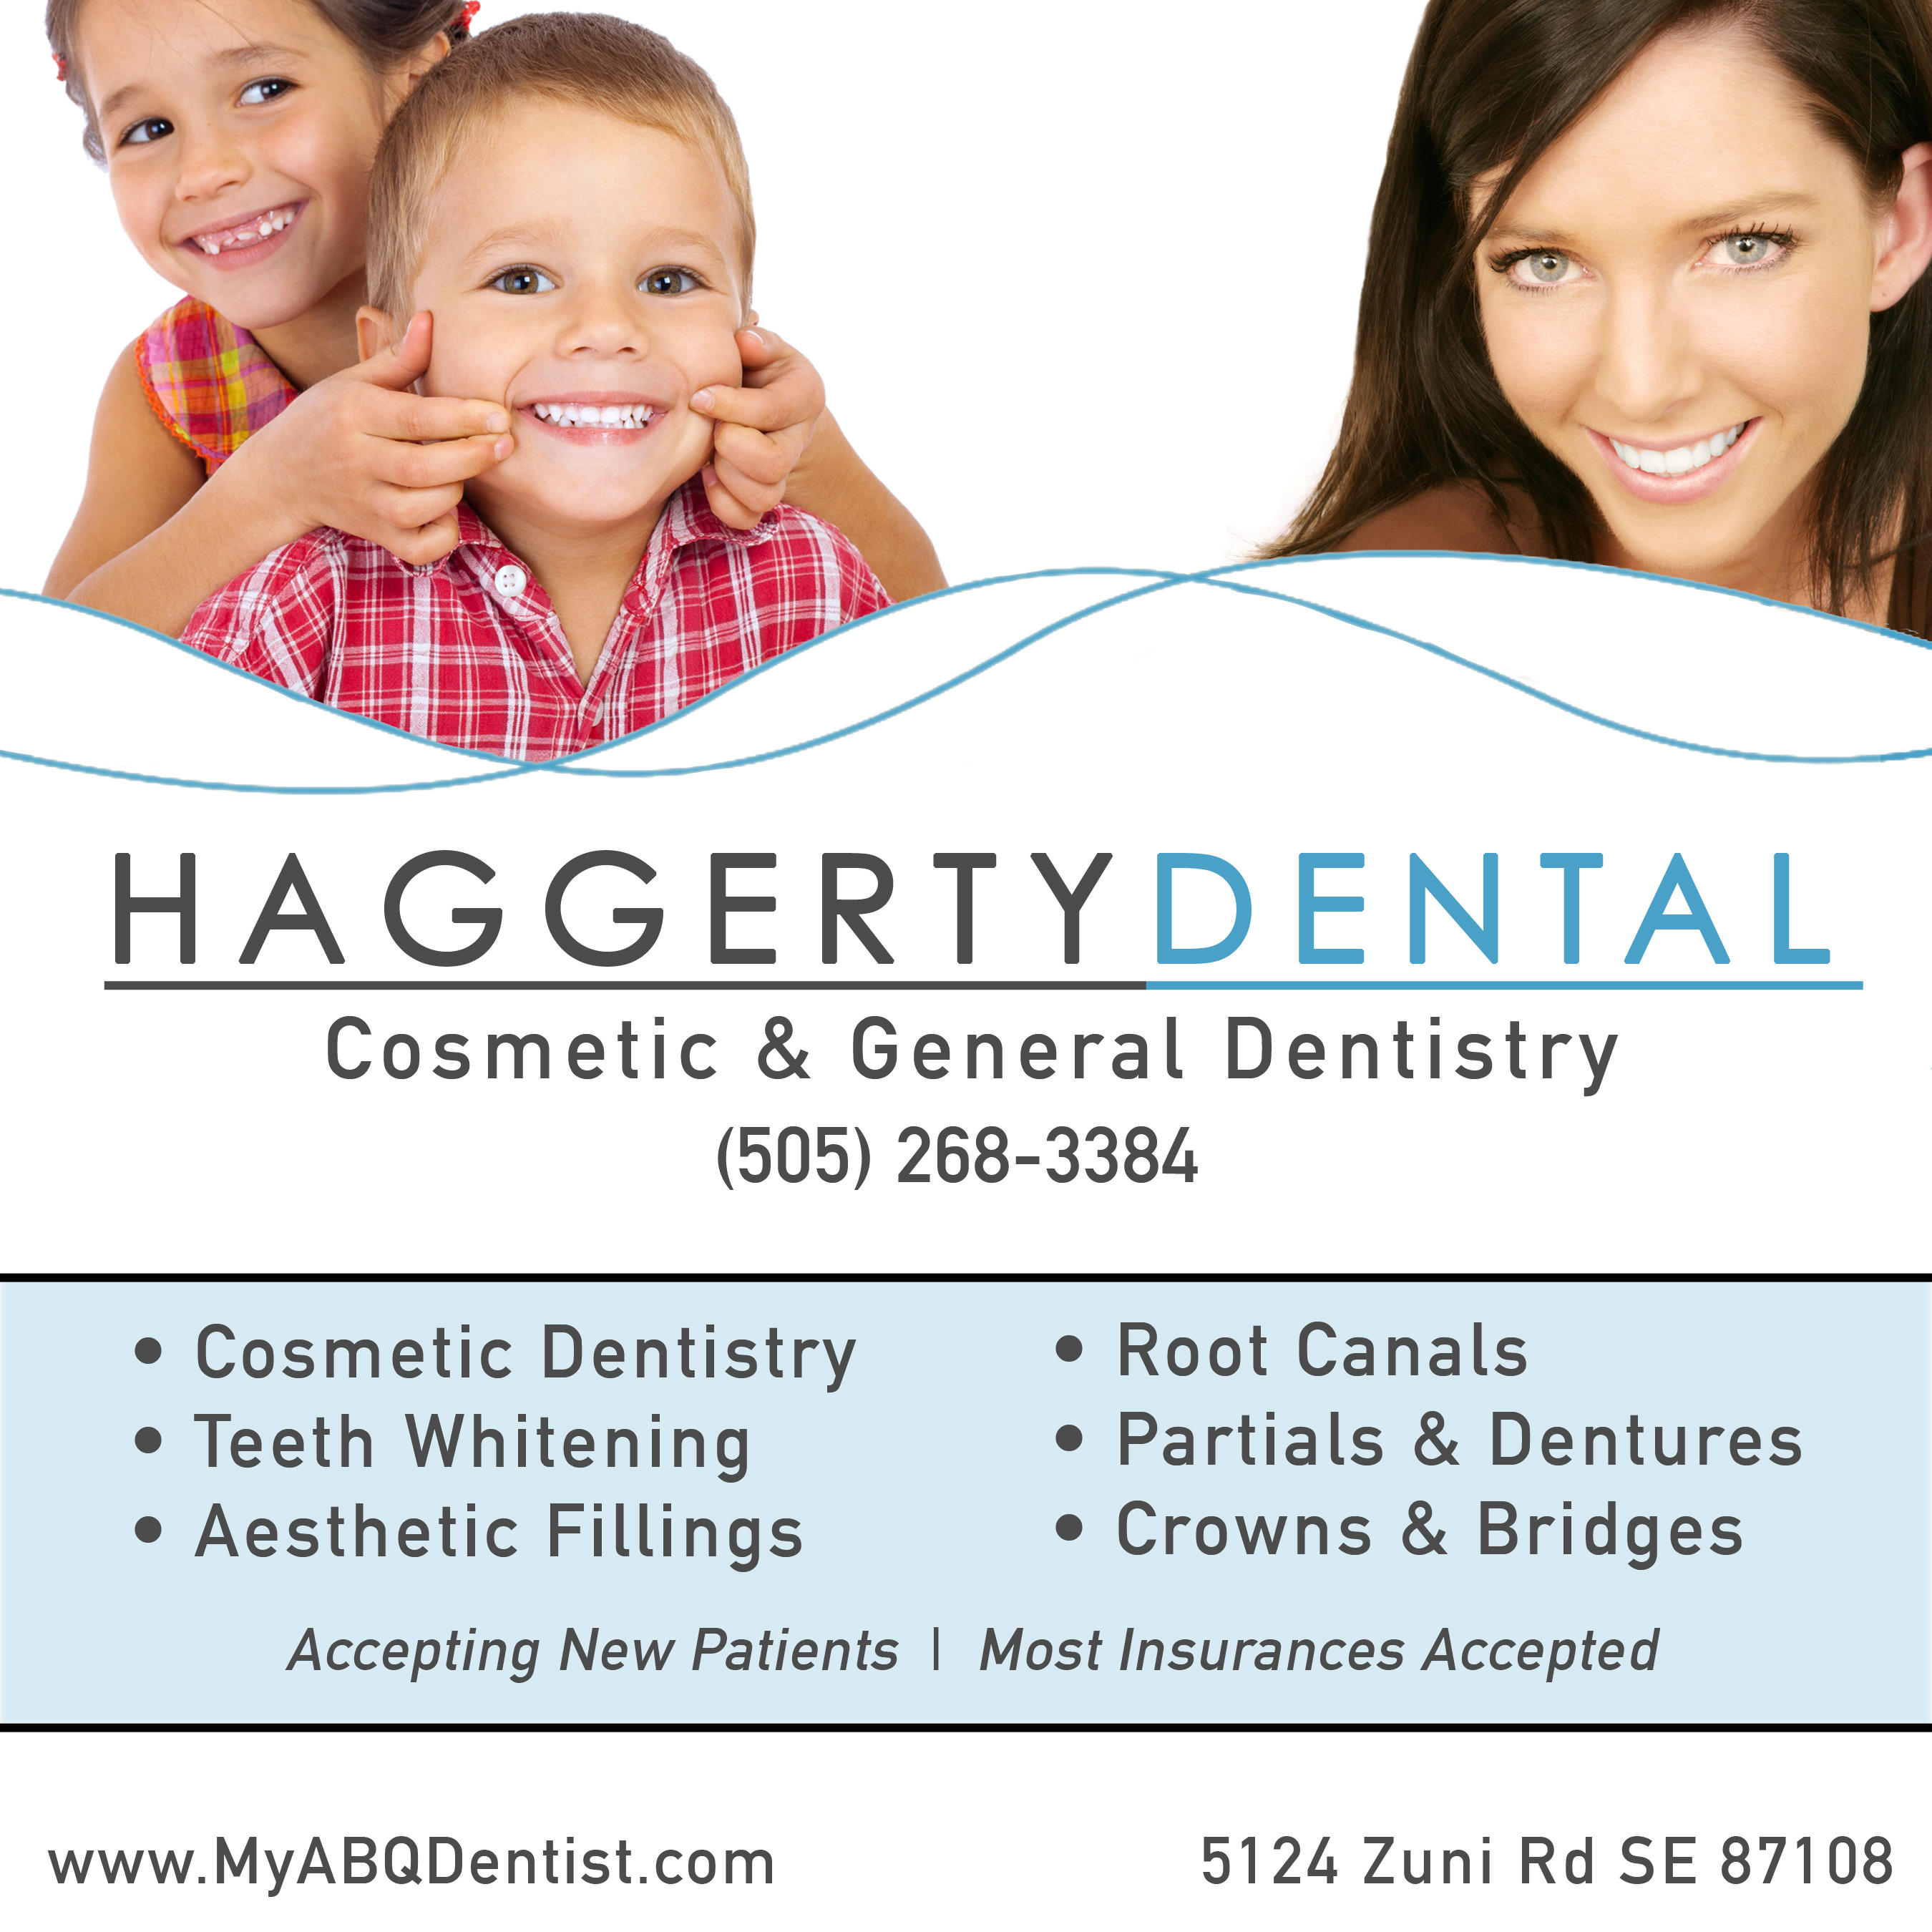 Haggerty Dental Photo